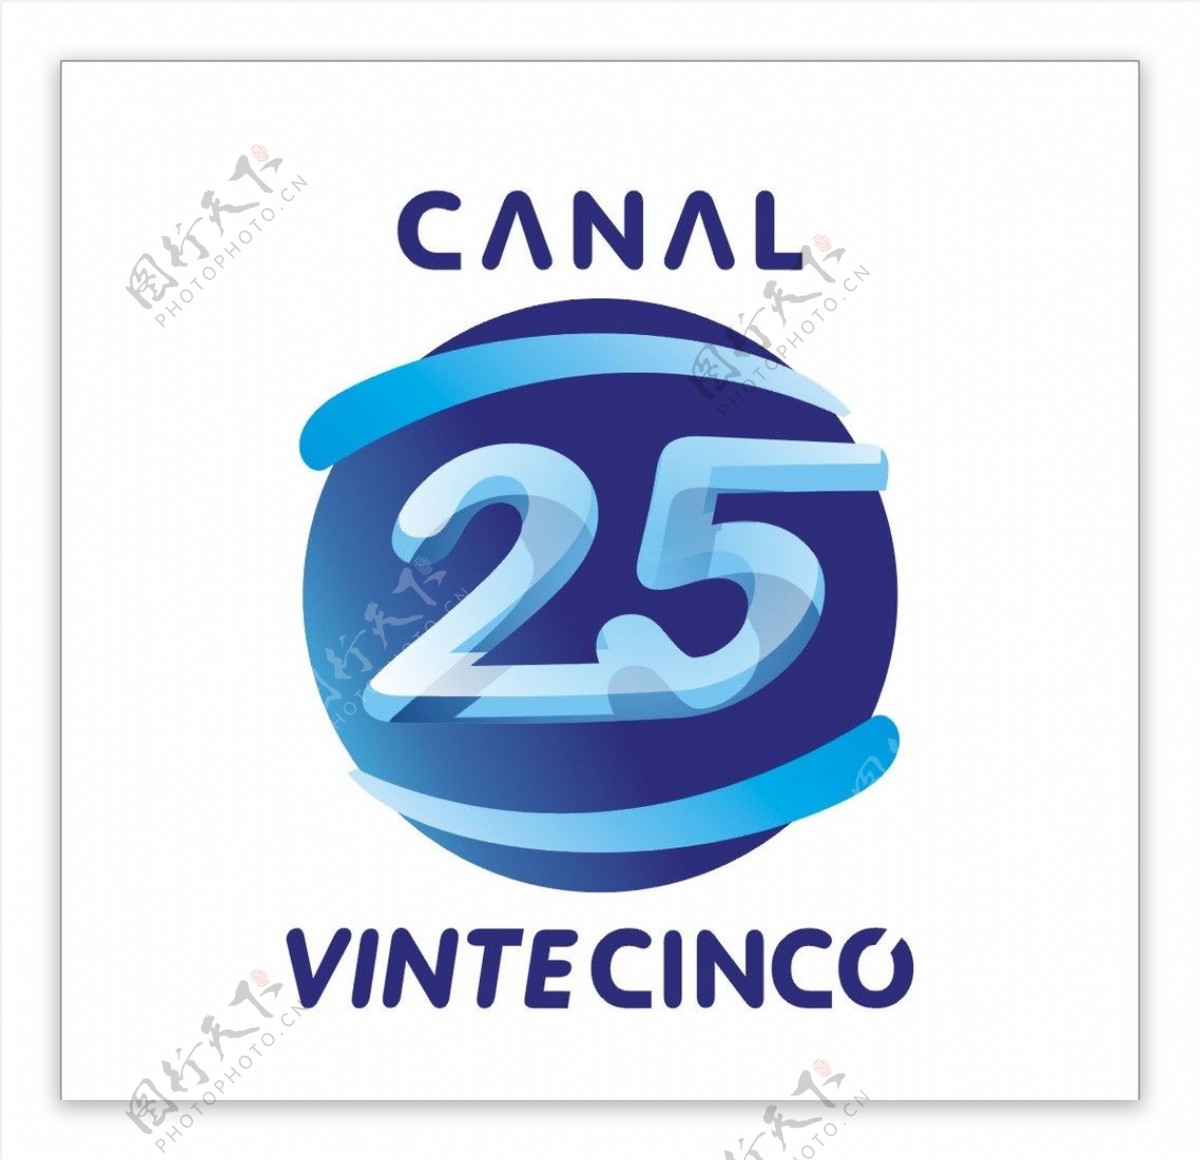 canal电视标志图片